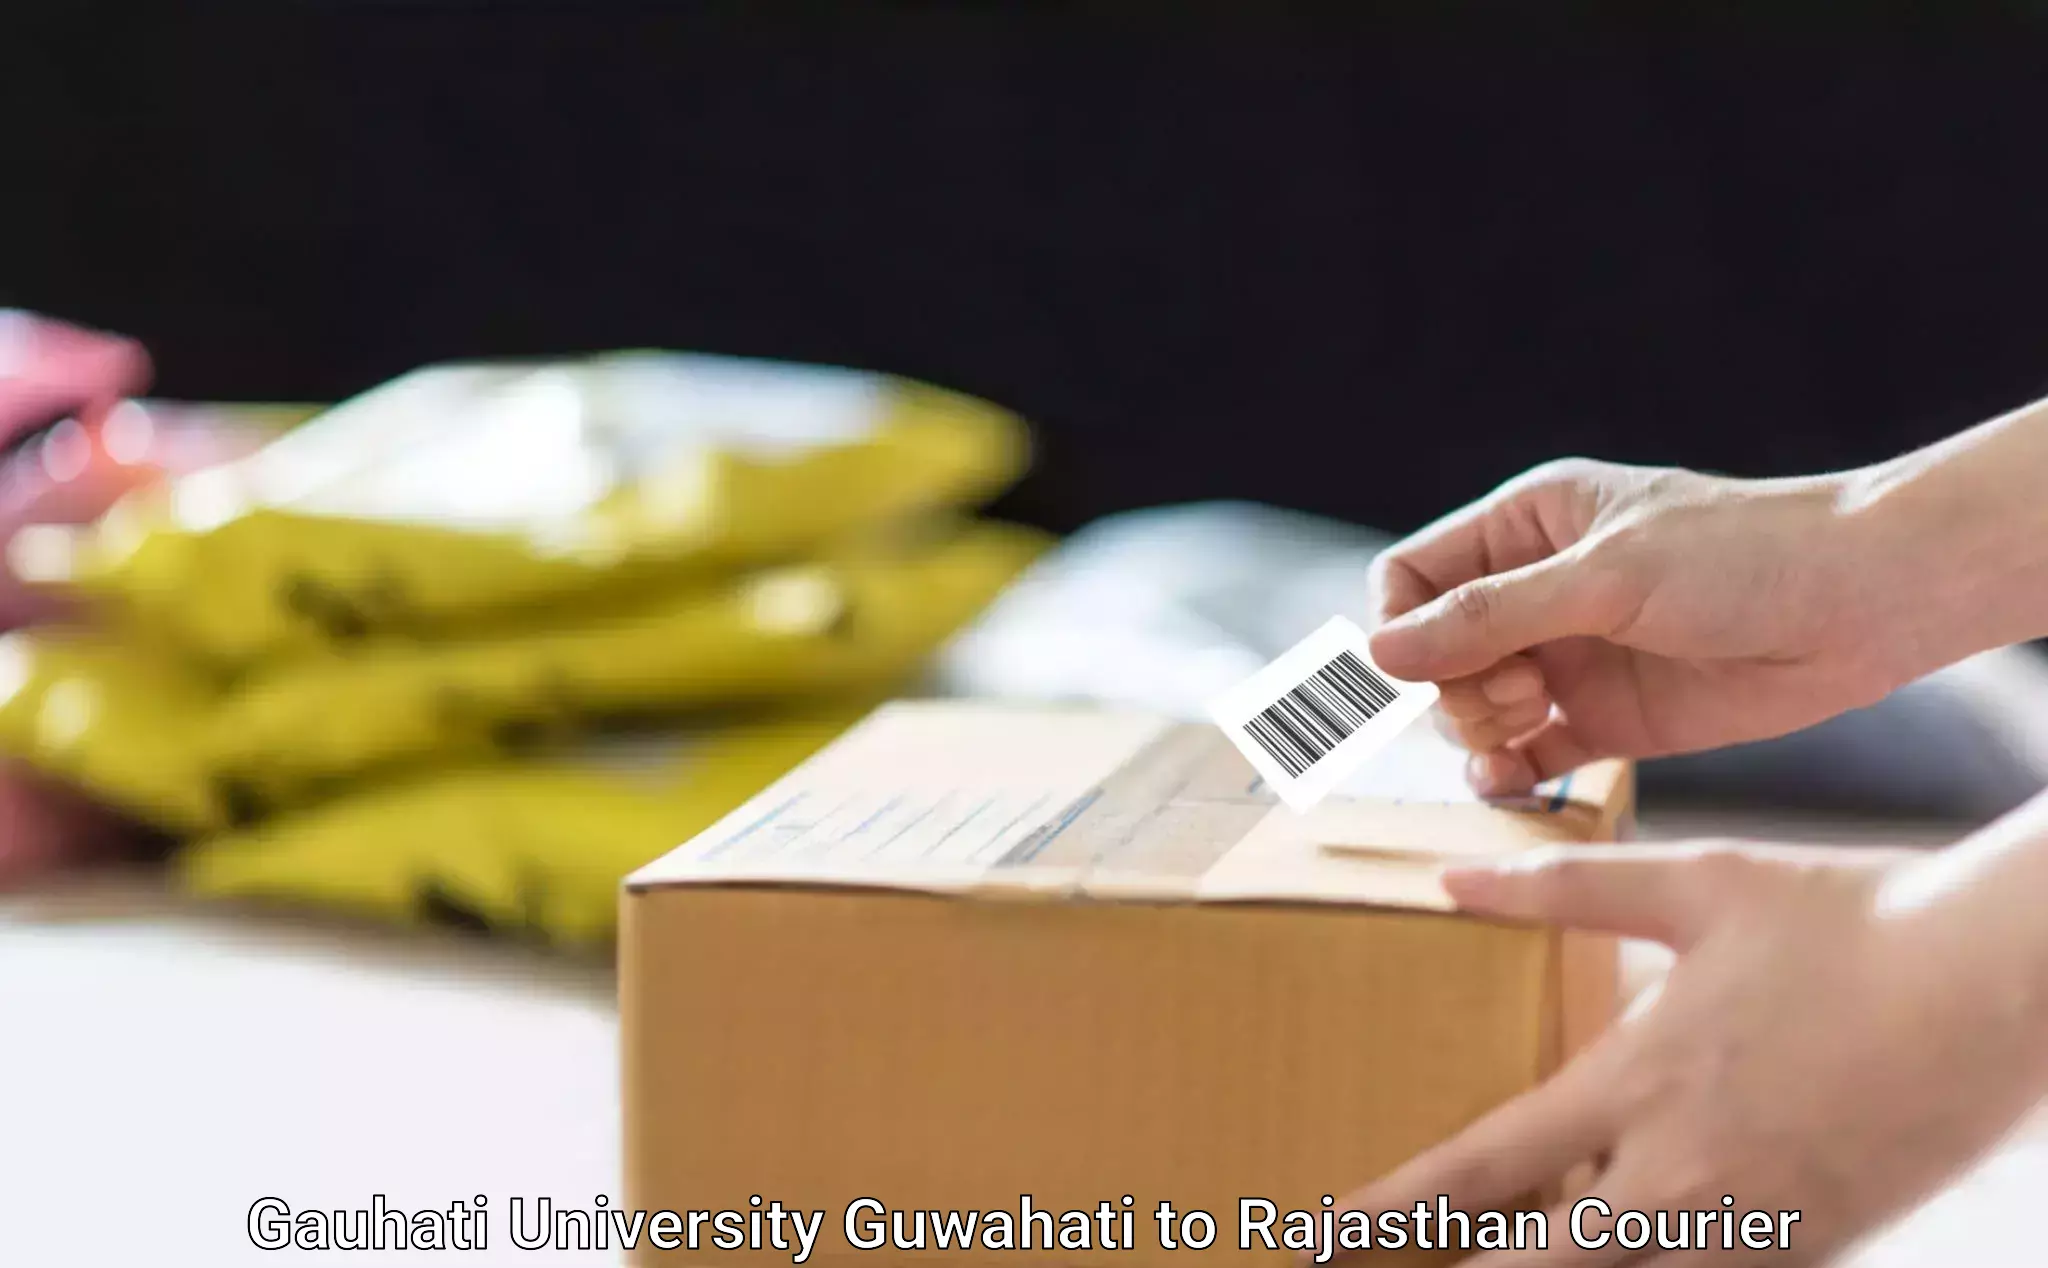 Efficient parcel transport Gauhati University Guwahati to Jaipur